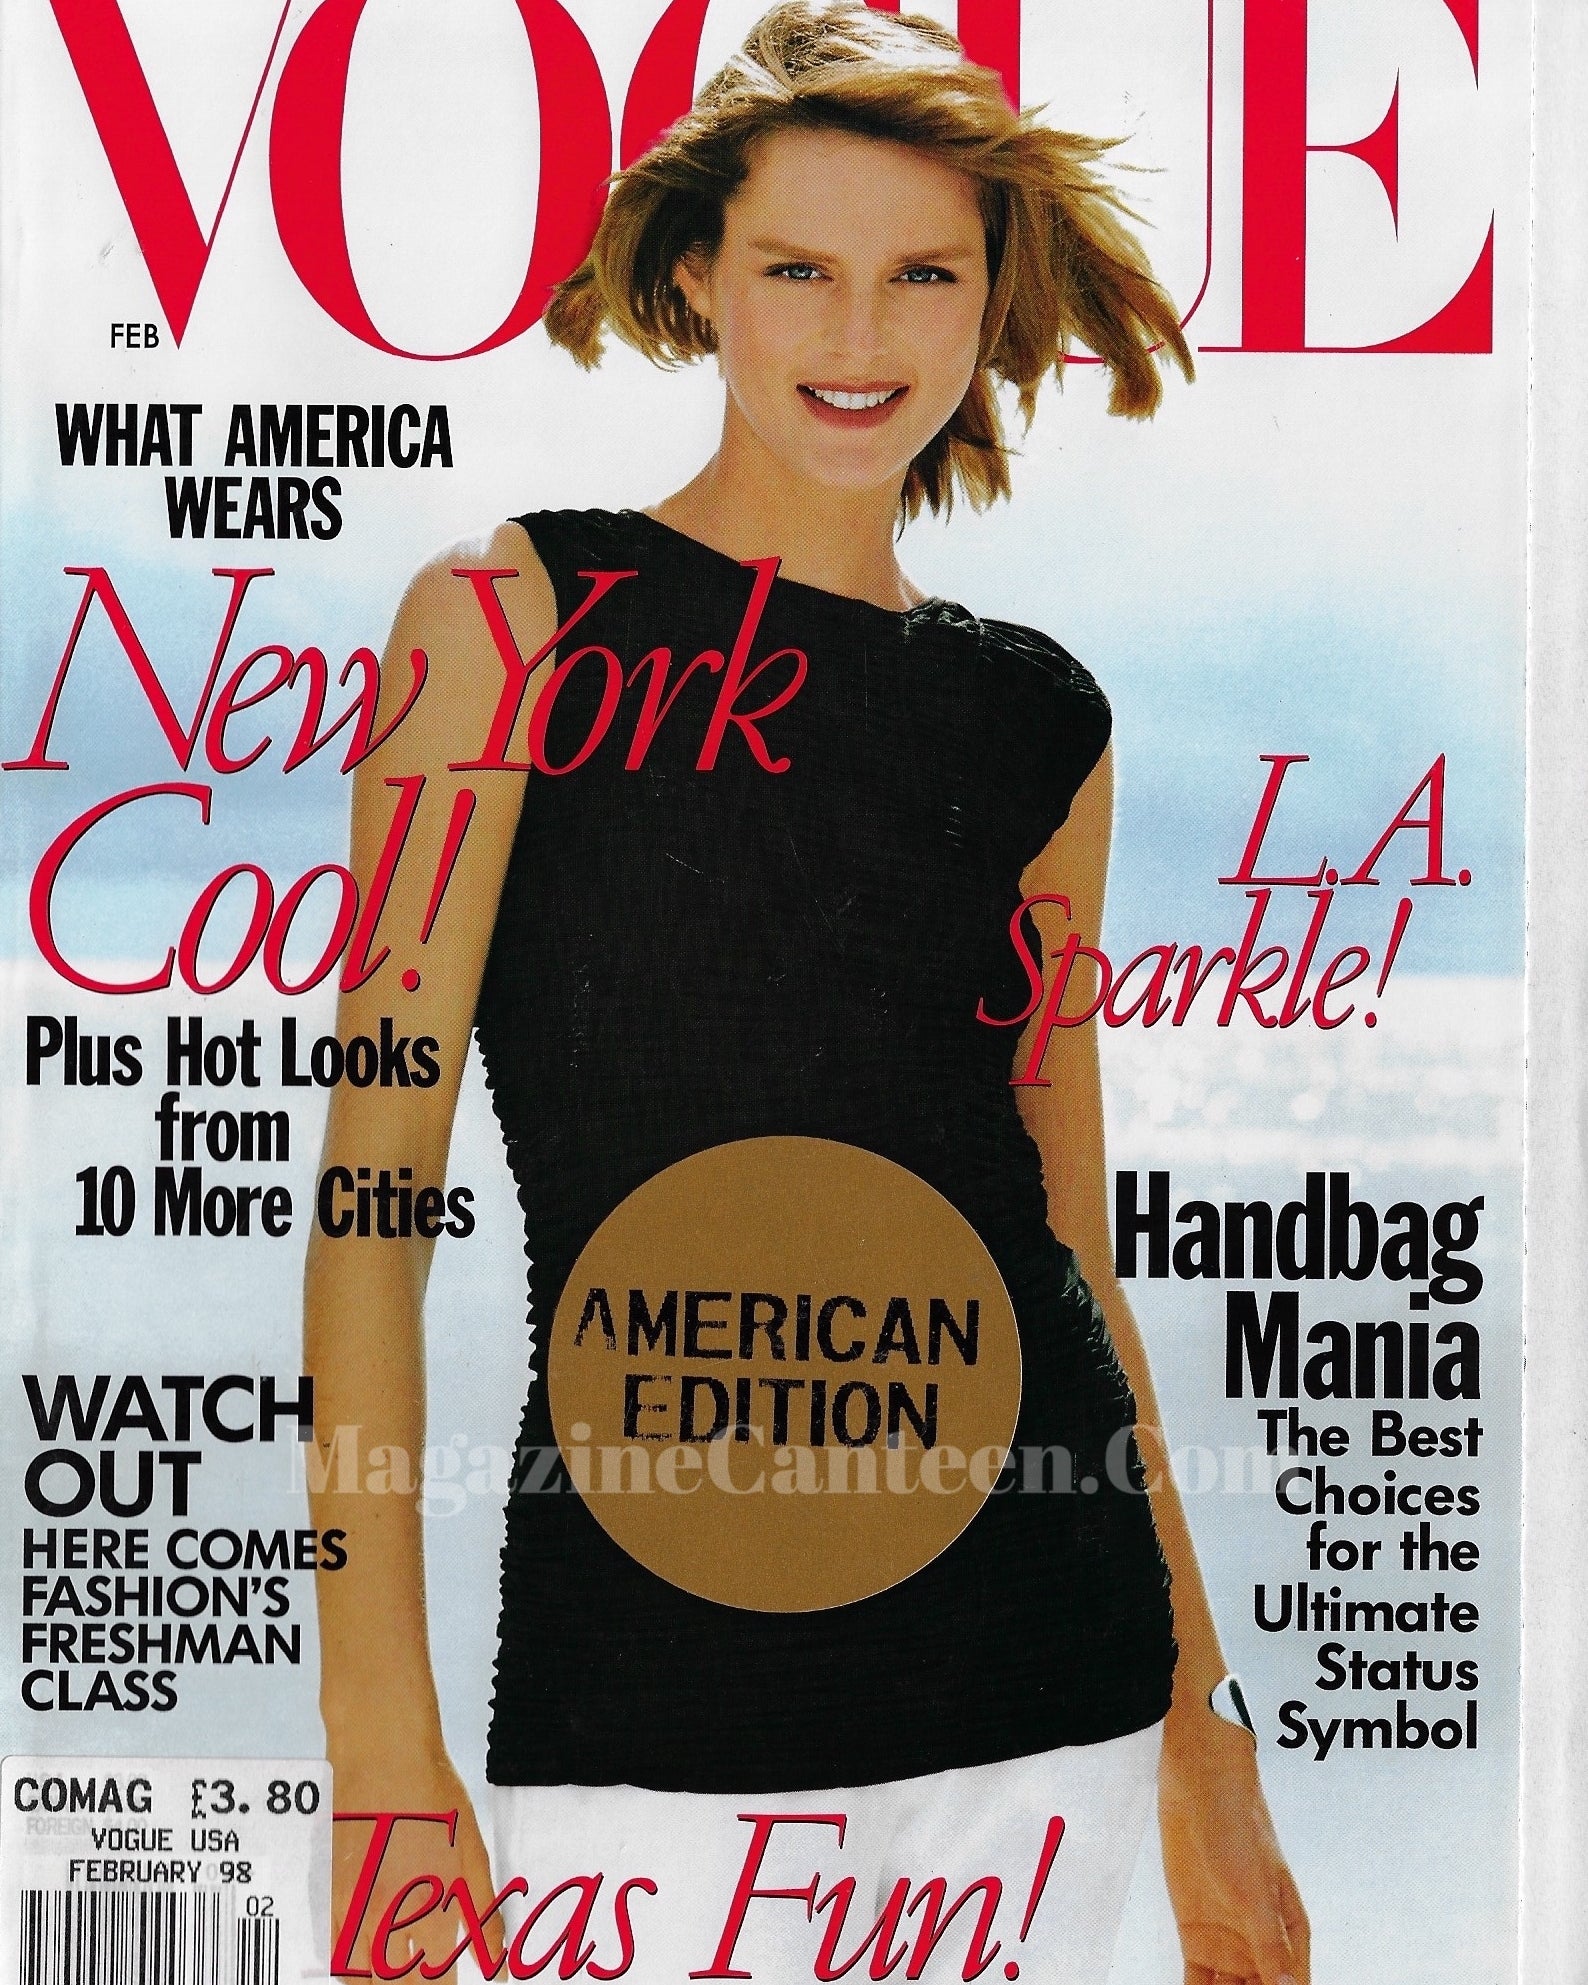 Vogue USA Magazine February 1998 - Stella Tennant